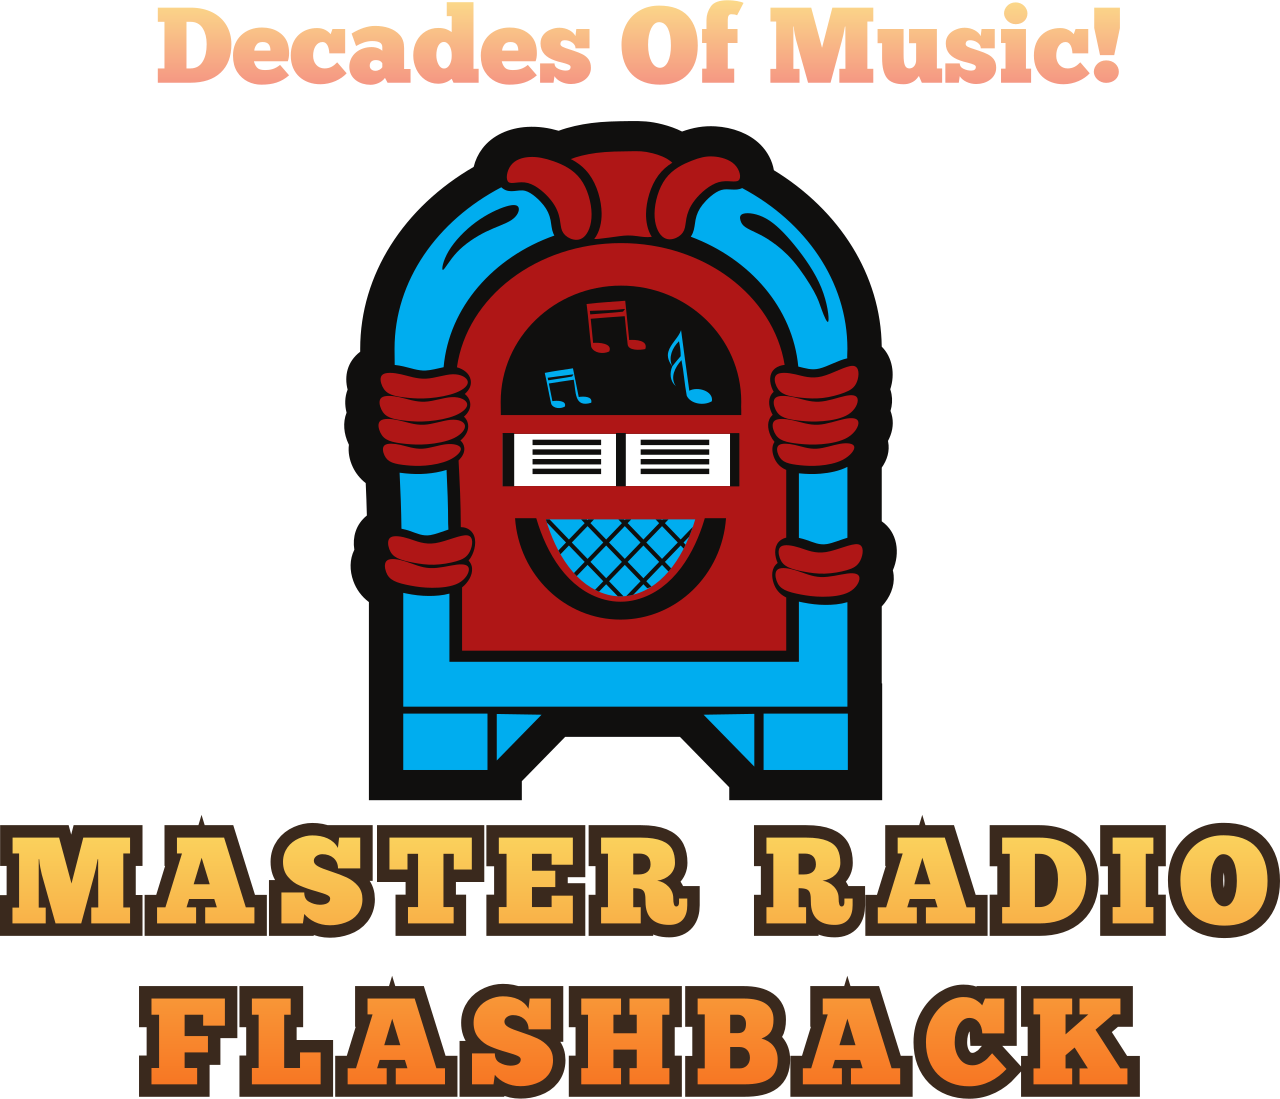 MASTER RADIO FLASHBACK's logo